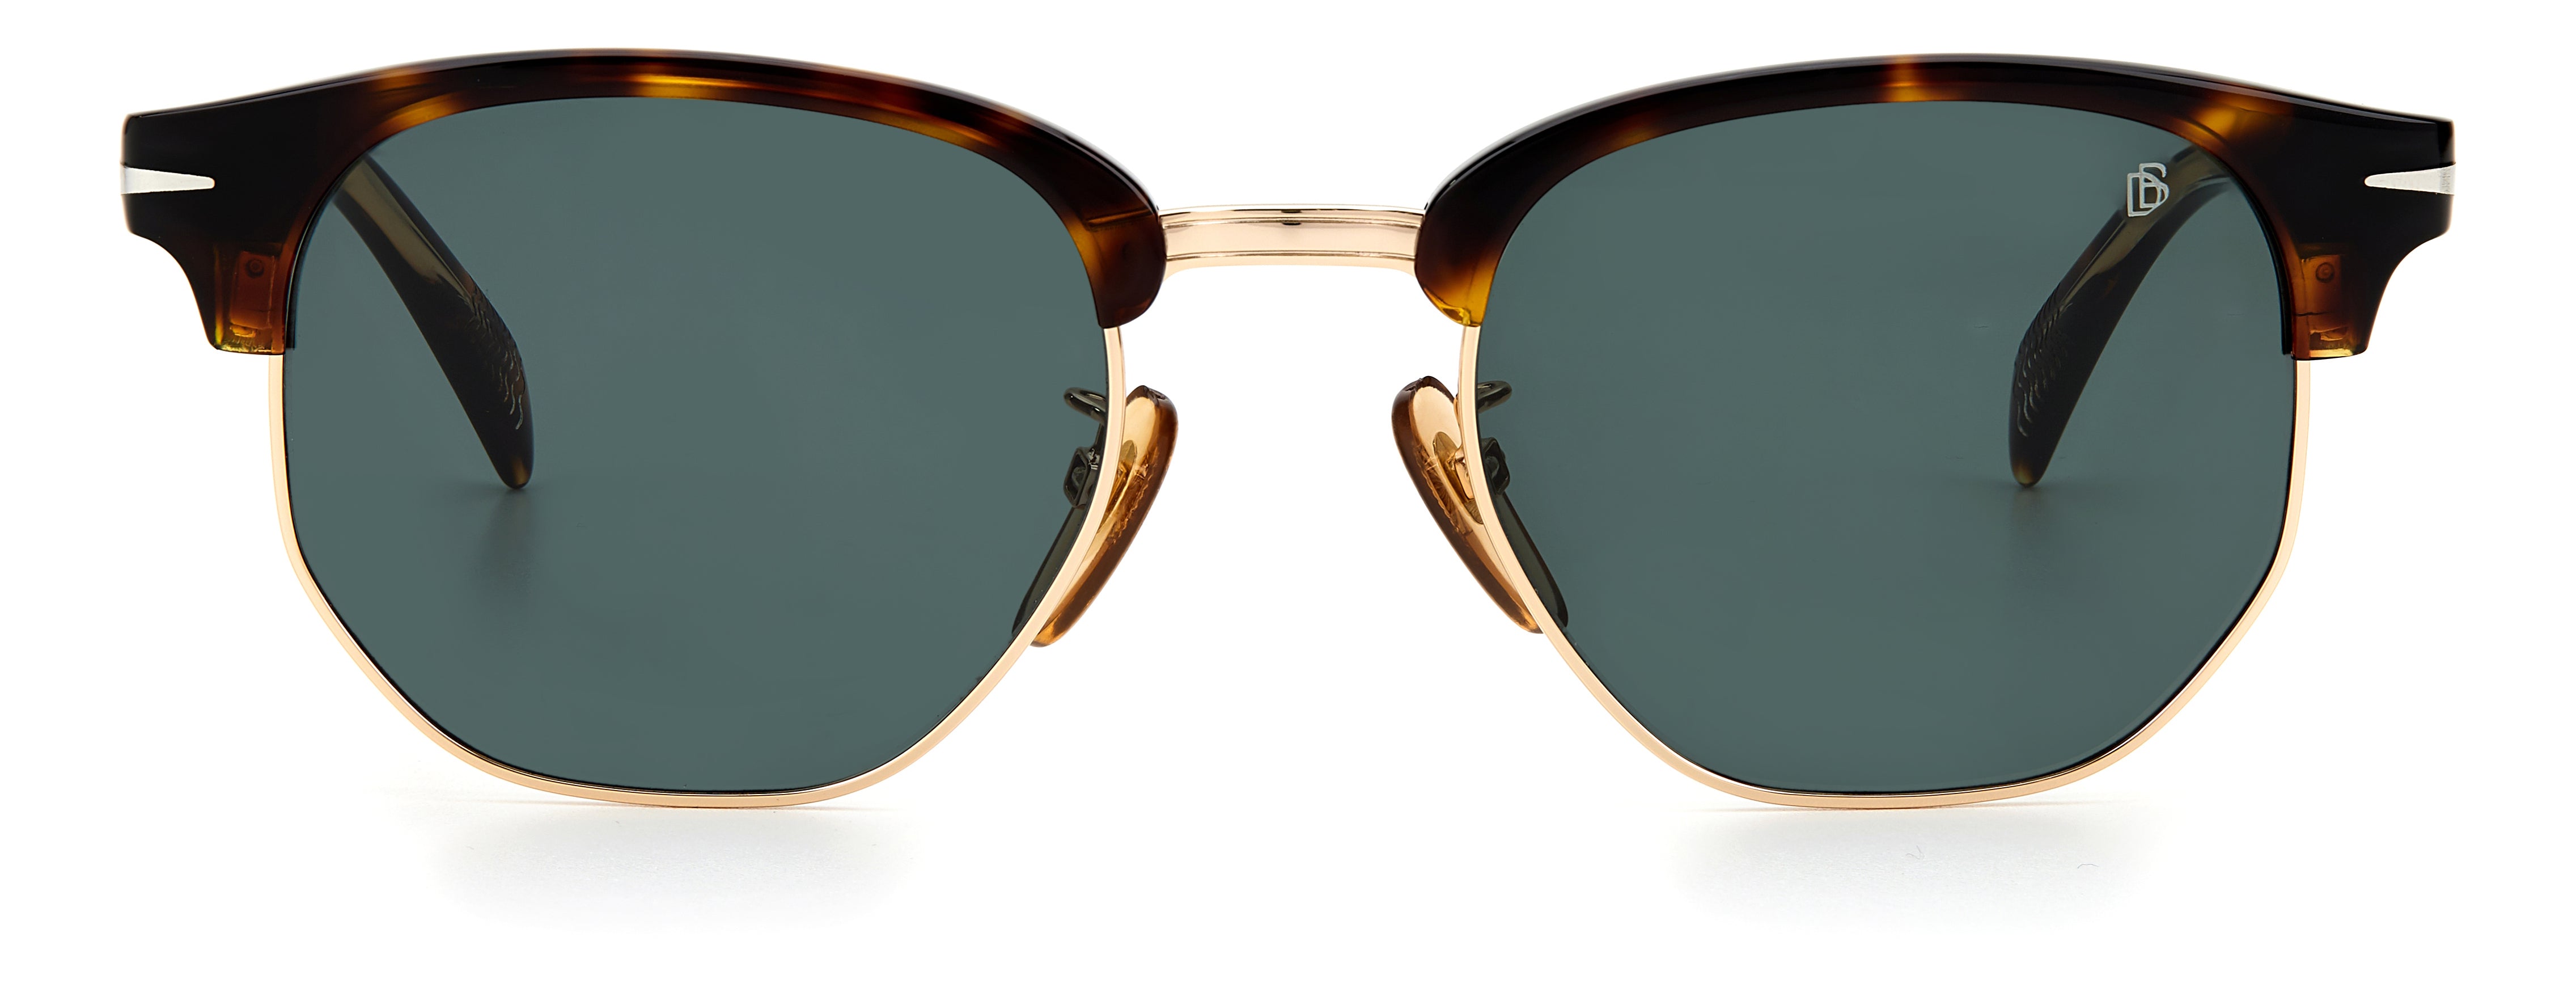 David Beckham Eyewear Clubmaster Sunglasses